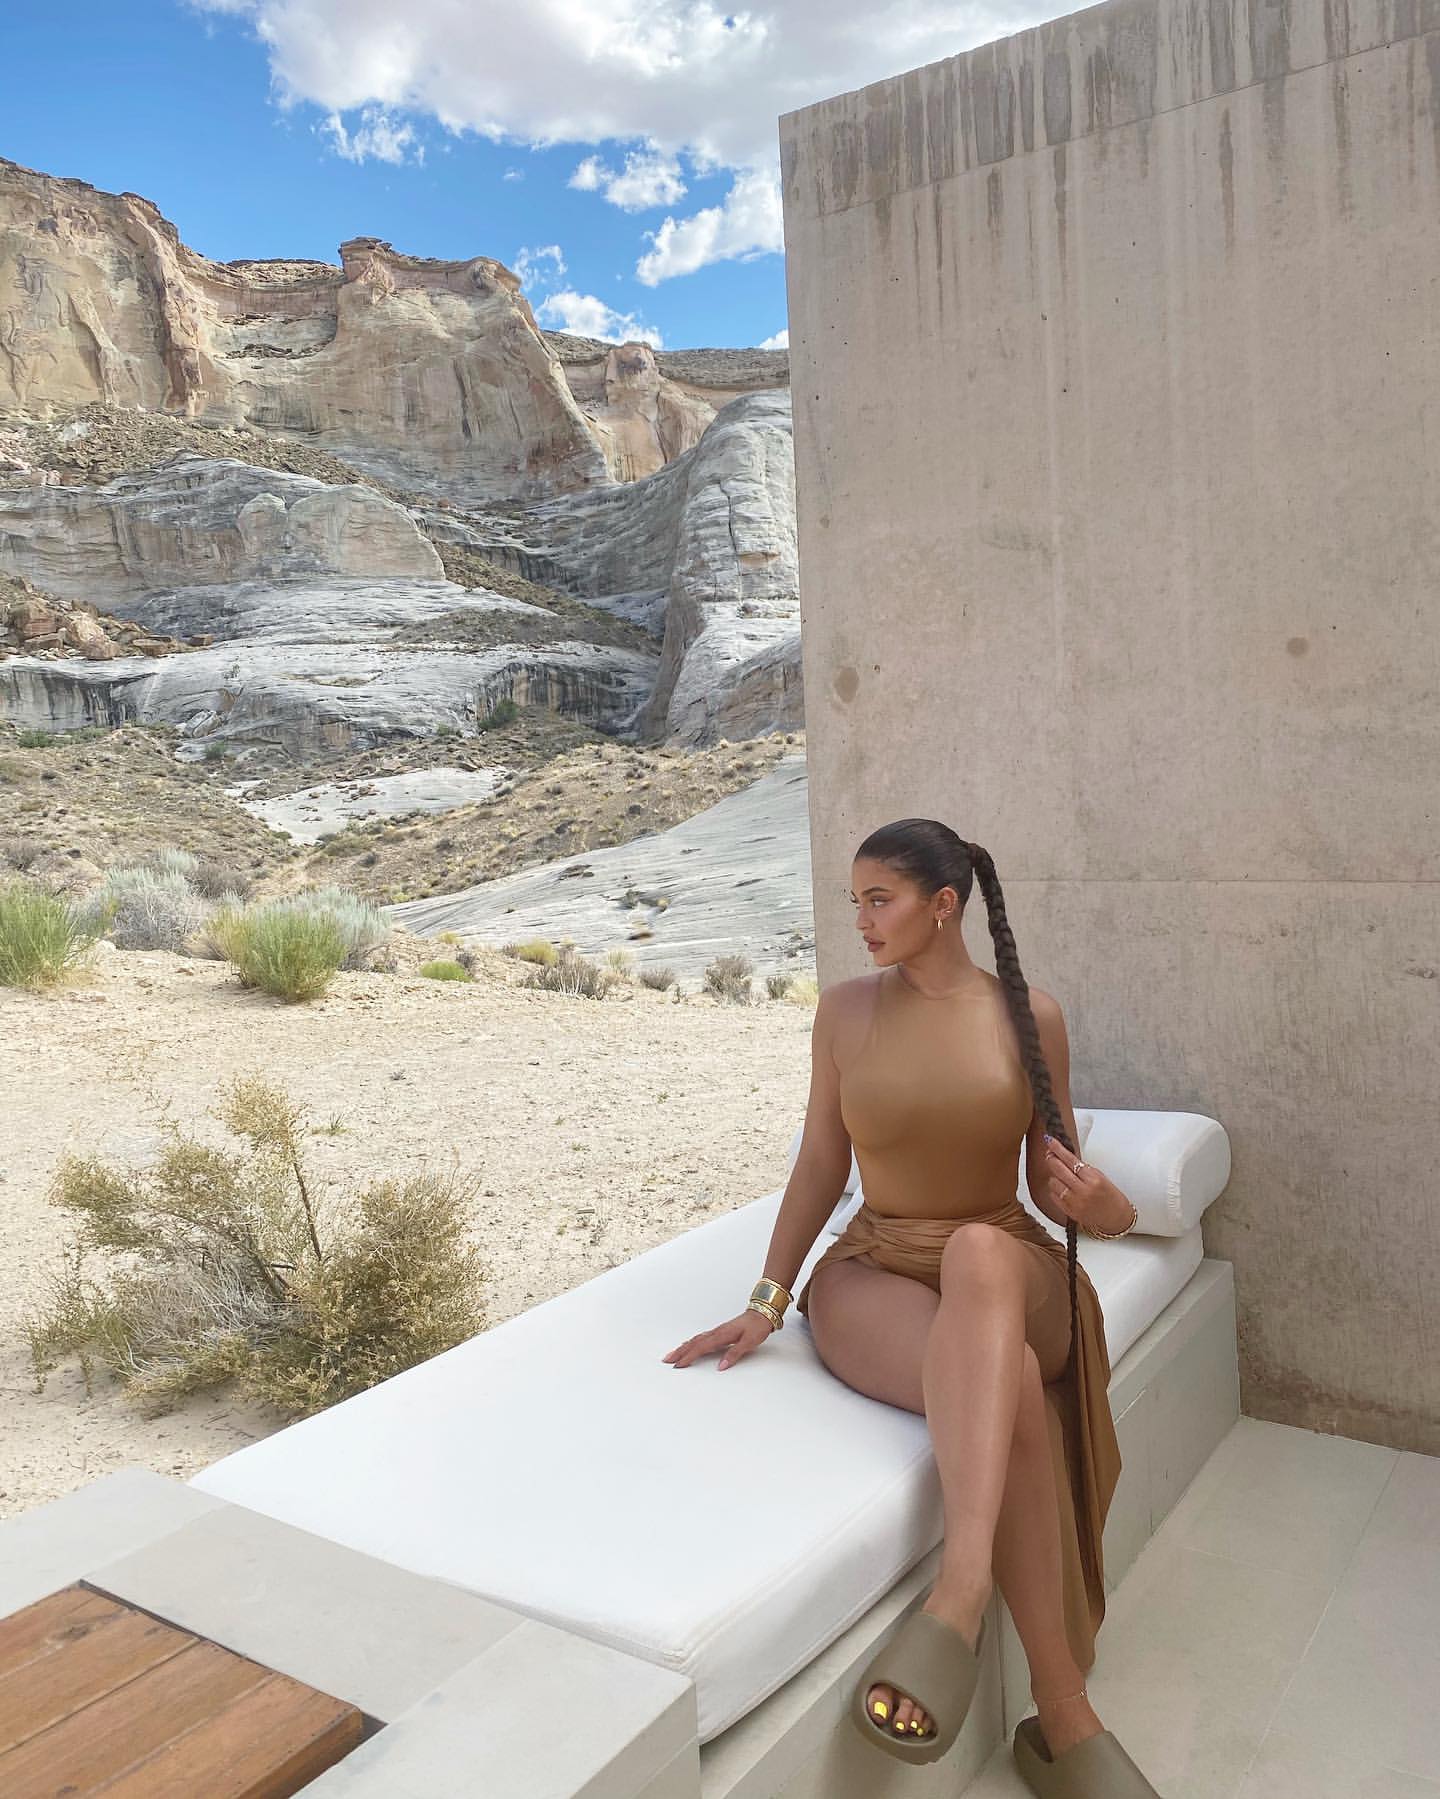 Fotos n°6 : Kylie Jenner Desert Nude!